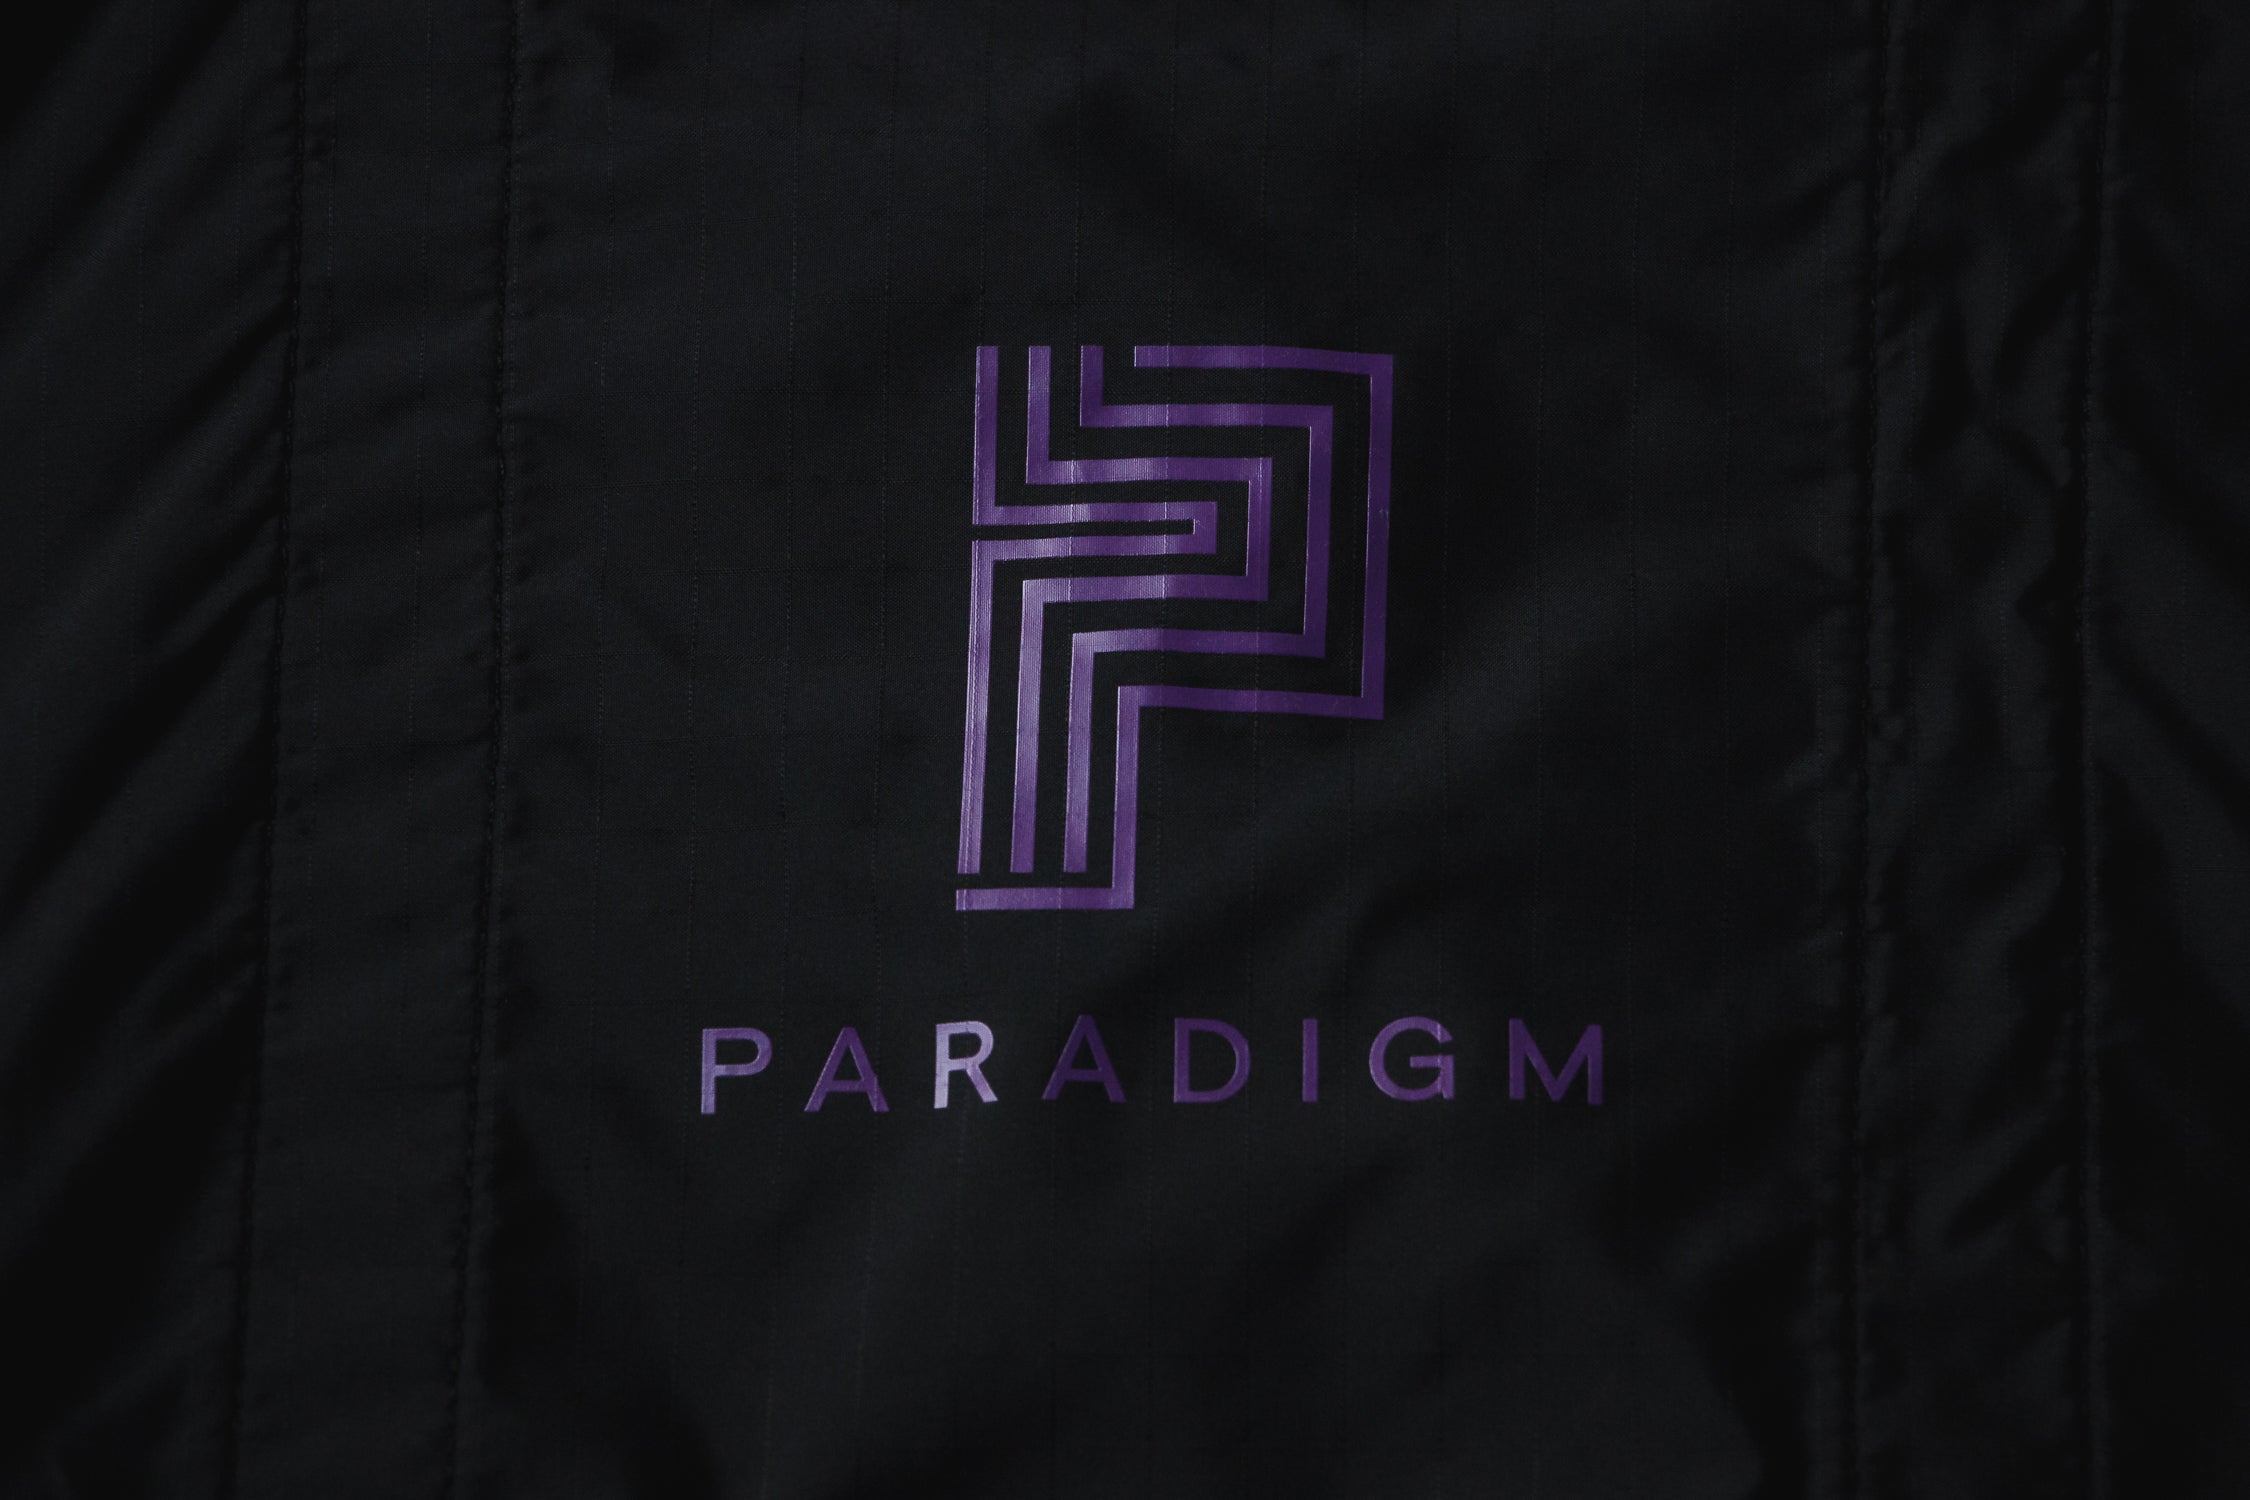 adidas x Paradigm Tote Bag (6689148633154)